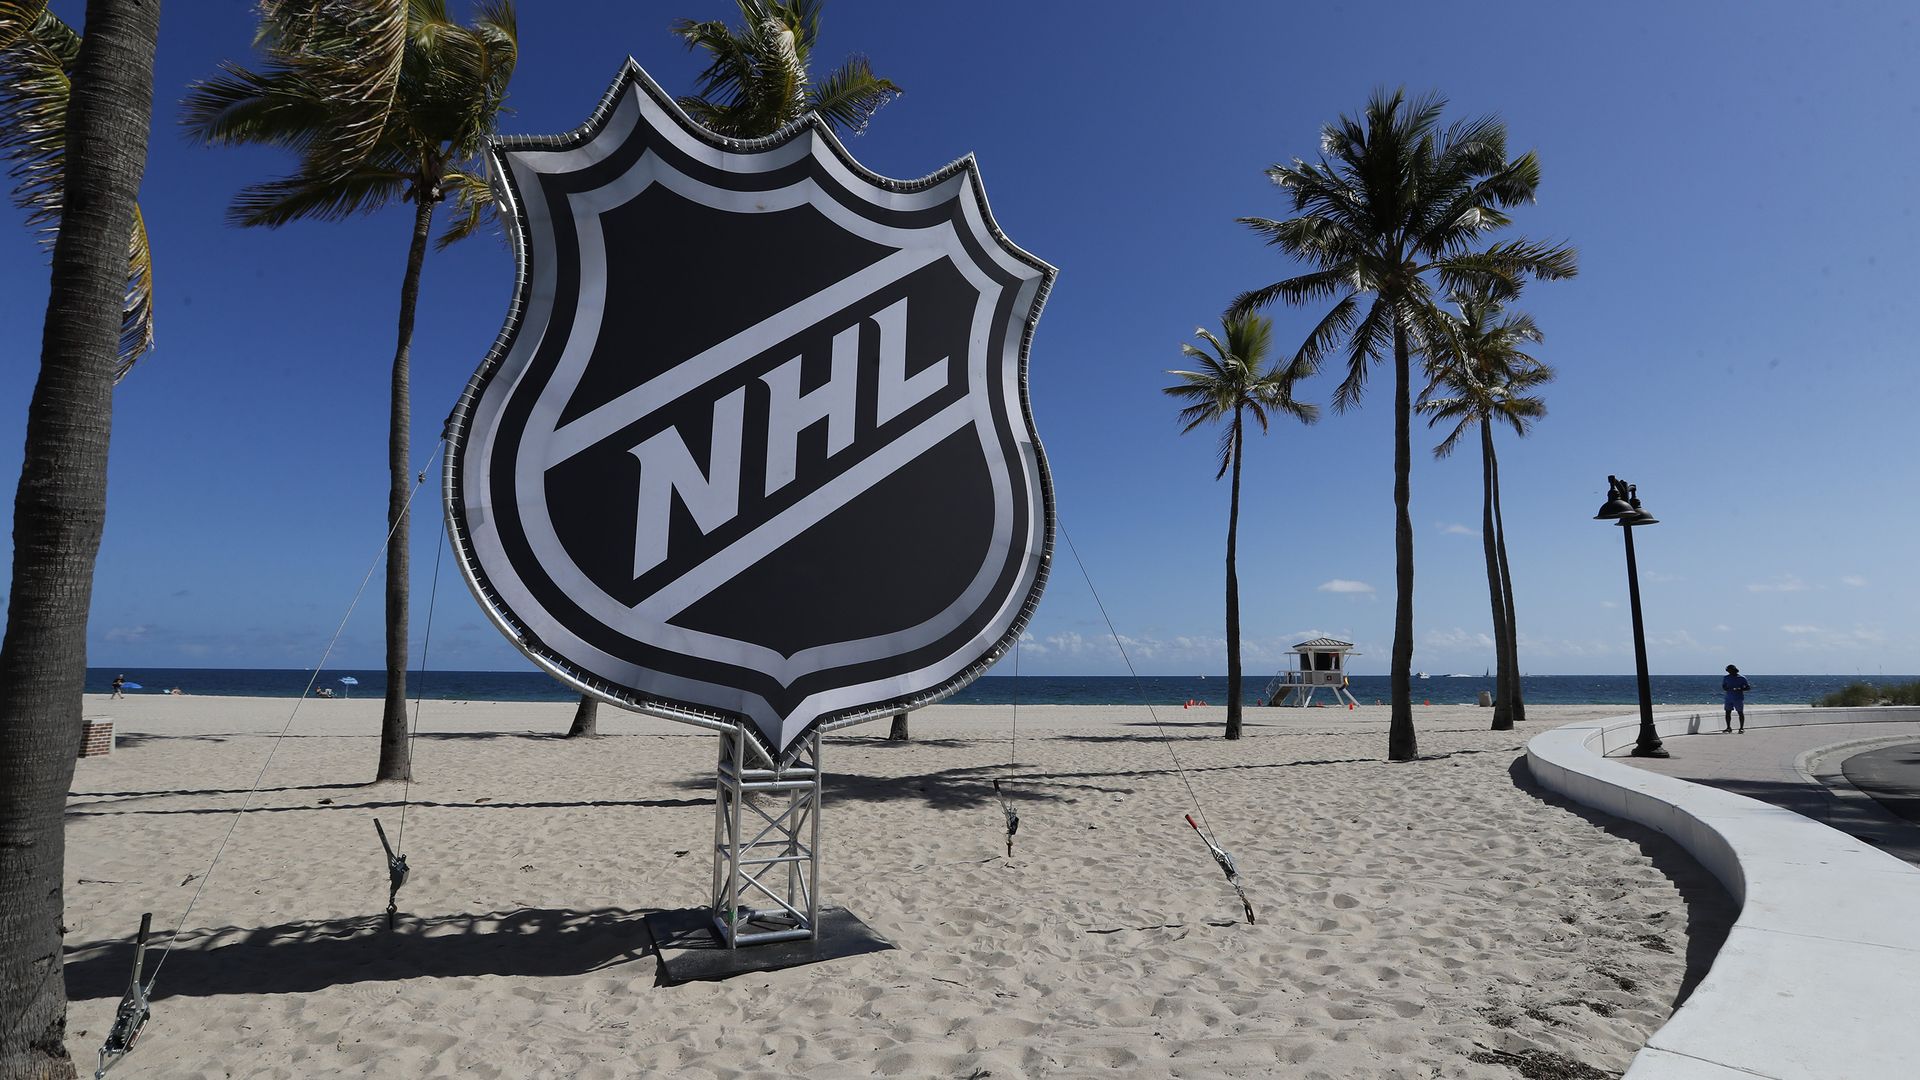 NHL logo on the beach